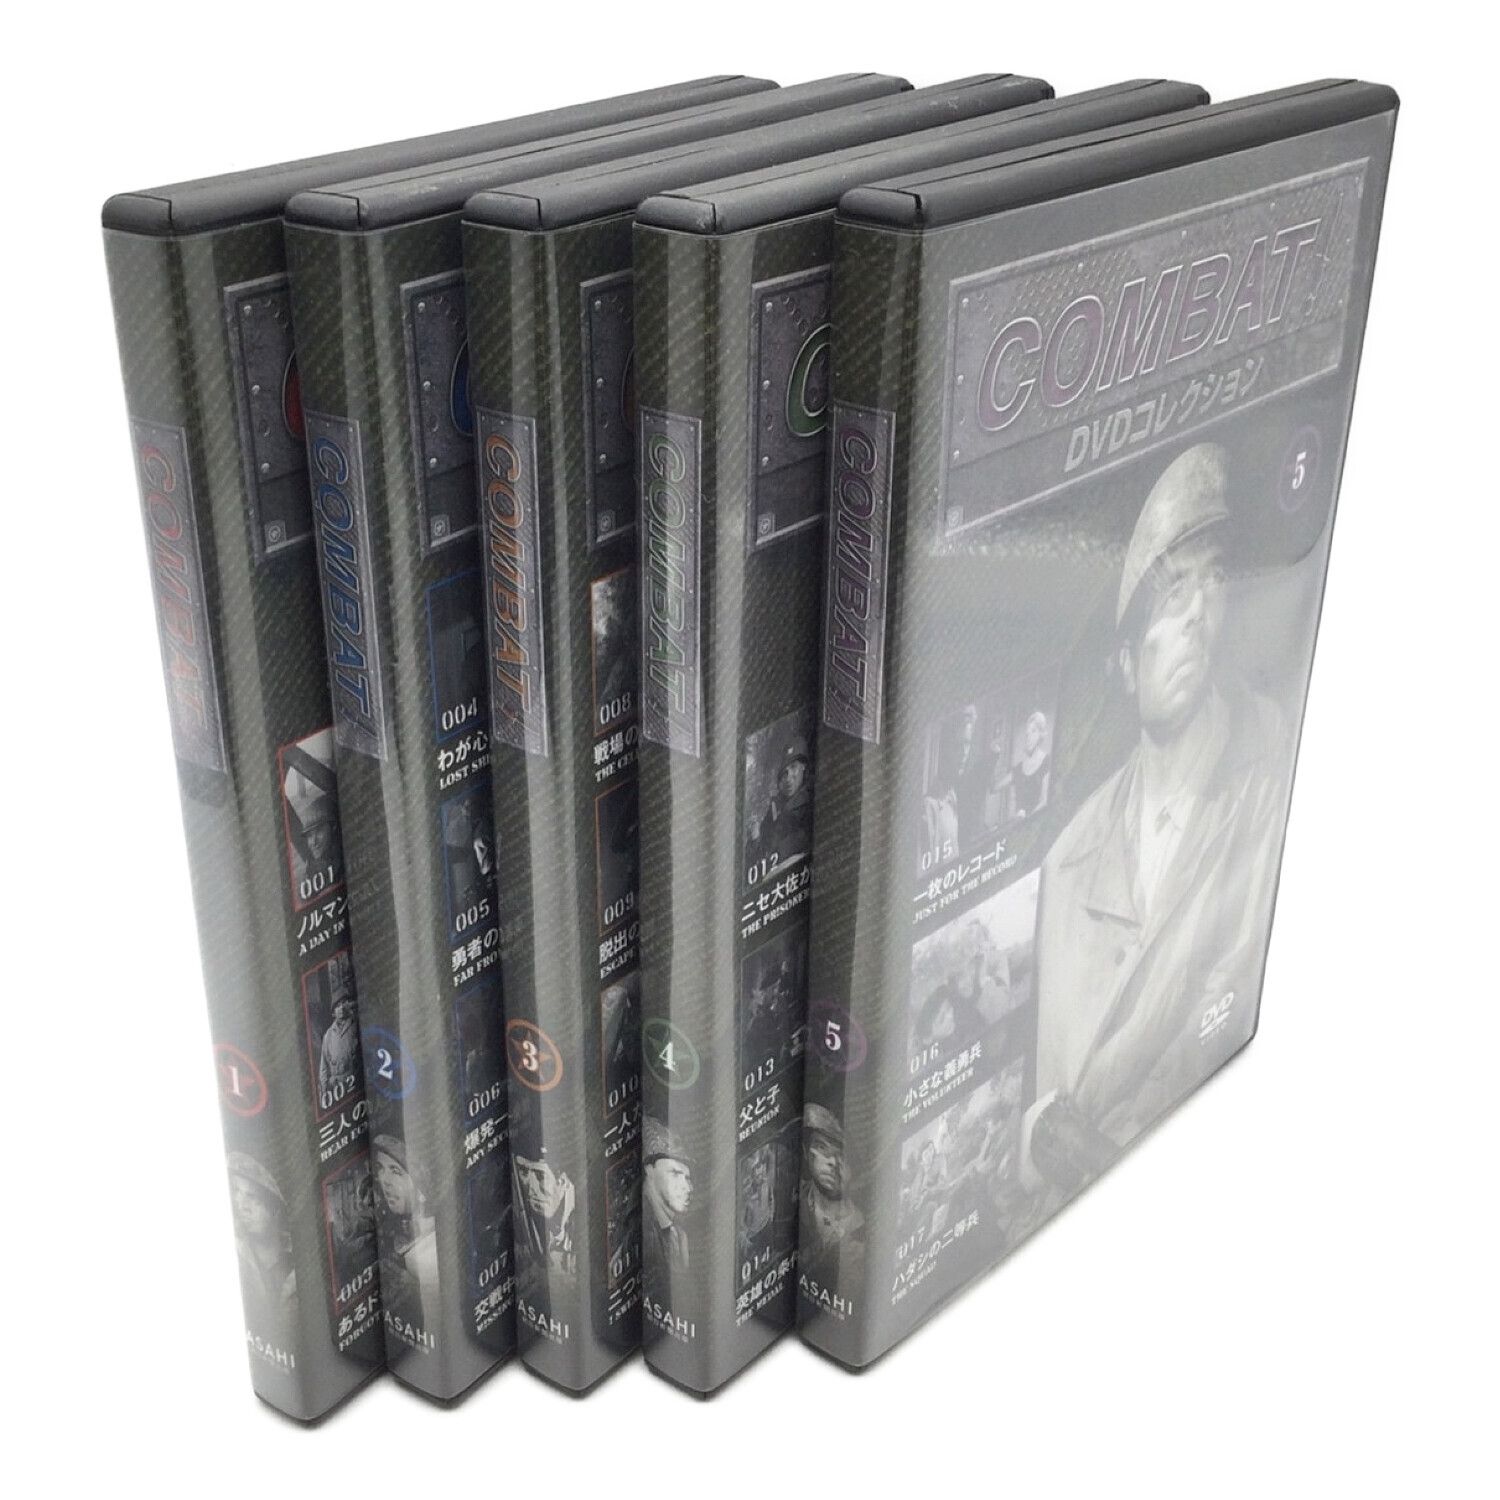 COMBAT コンバット DVD コレクション 全50巻 全巻 全話完結揃い - DVD ...